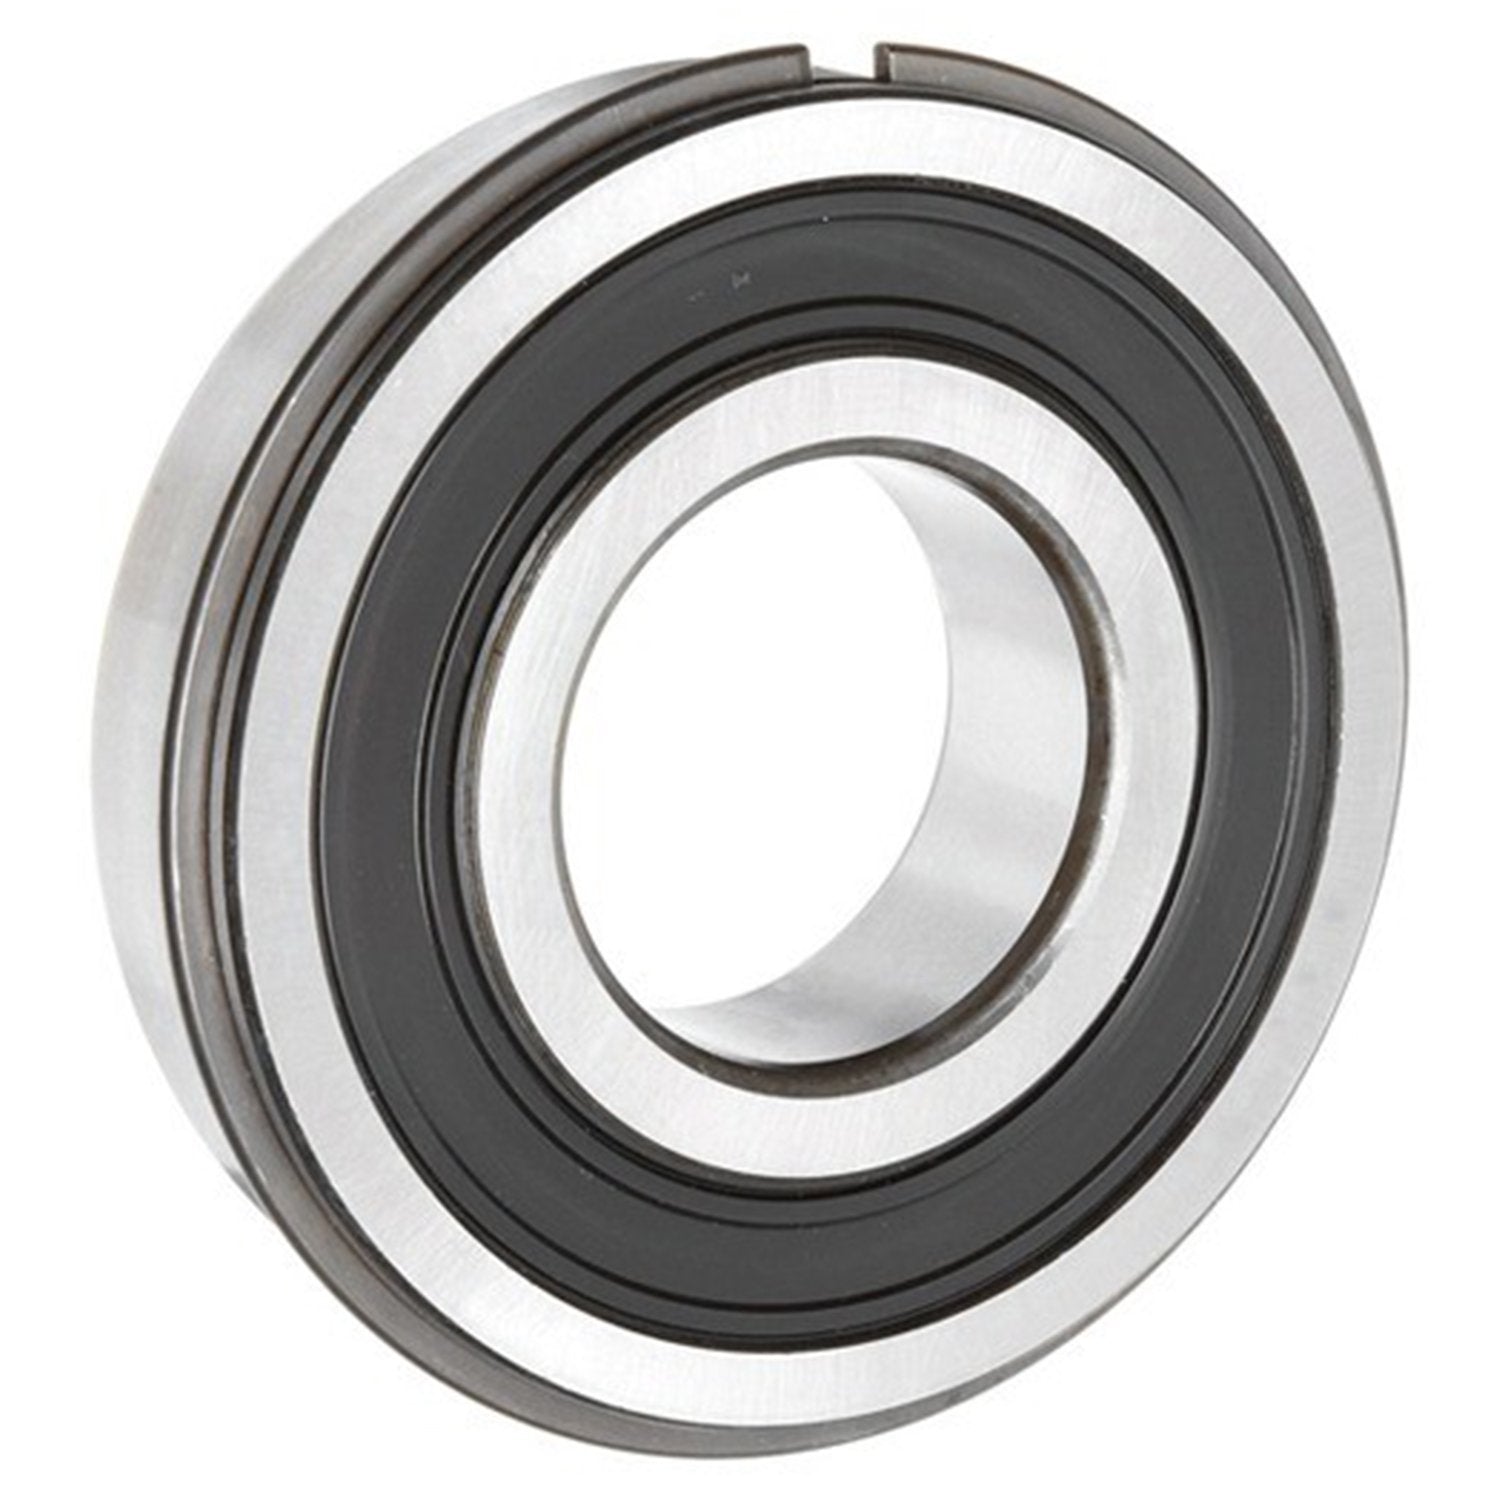 6003-2RSHNR SKF Ball bearing with locking ring 17x35x10 SKF